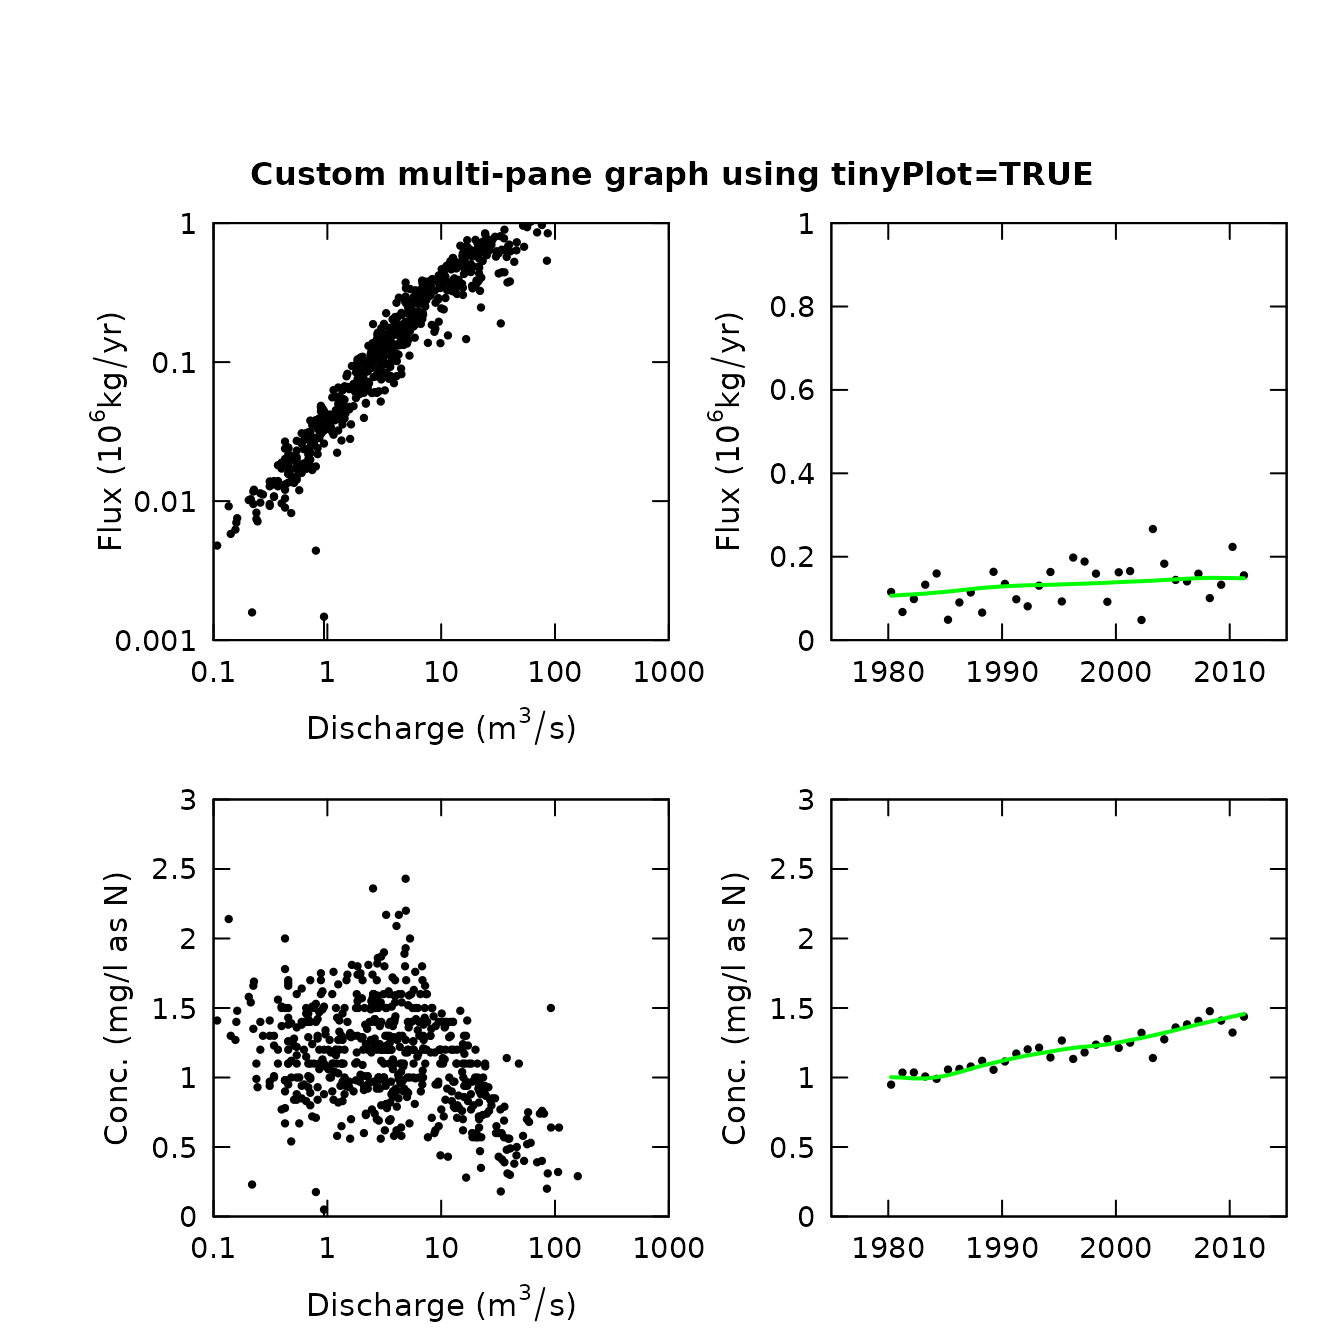 Custom multipanel plot using tinyPlot